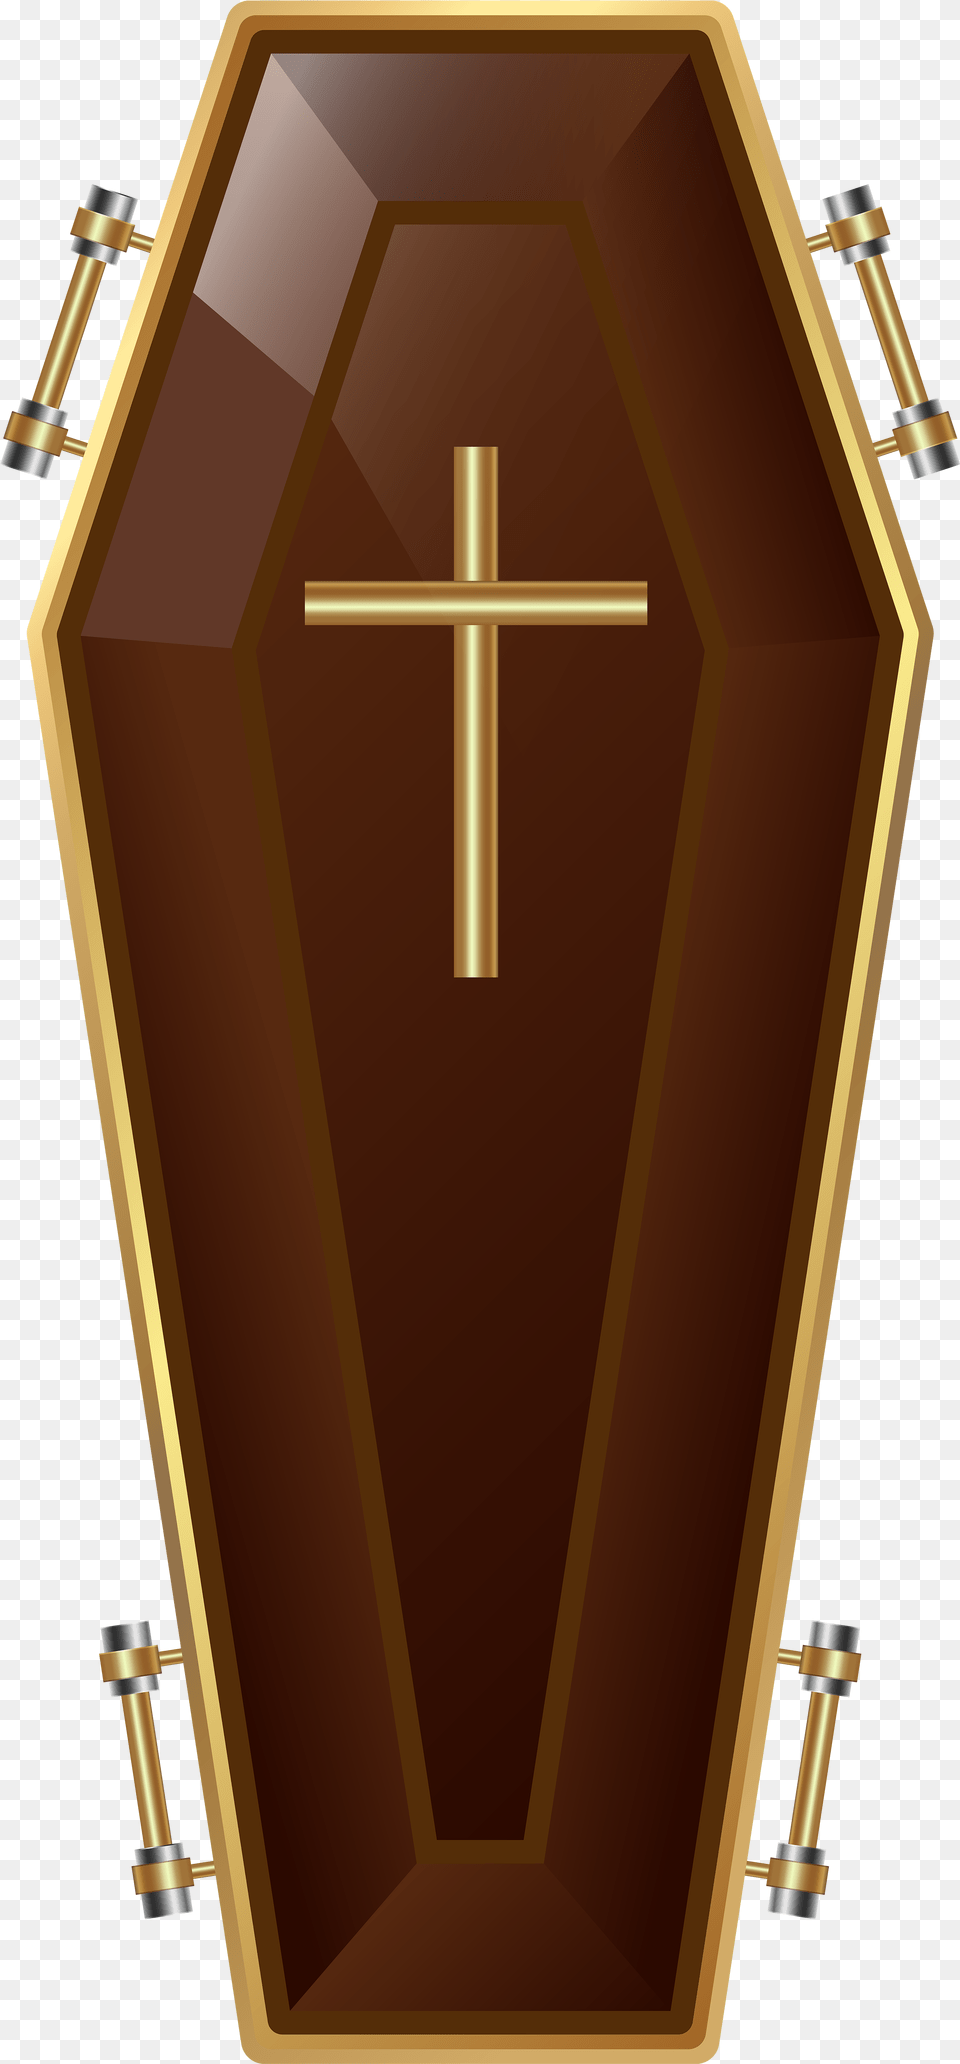 Coffin Transparent, Armor, Cross, Symbol Png Image